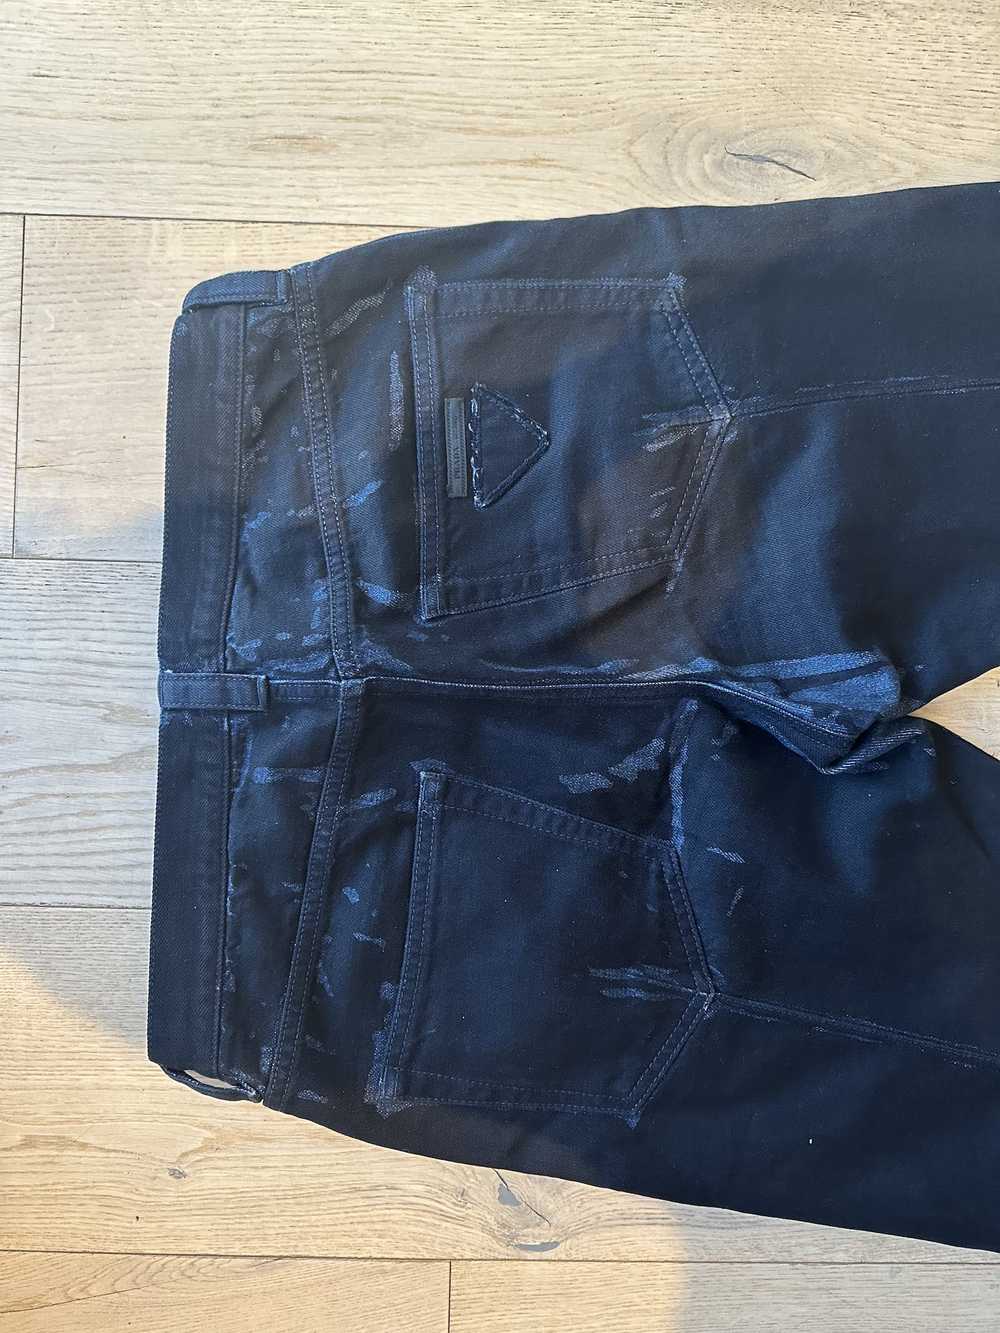 Prada Prada Over dyed slim fit jeans - image 4